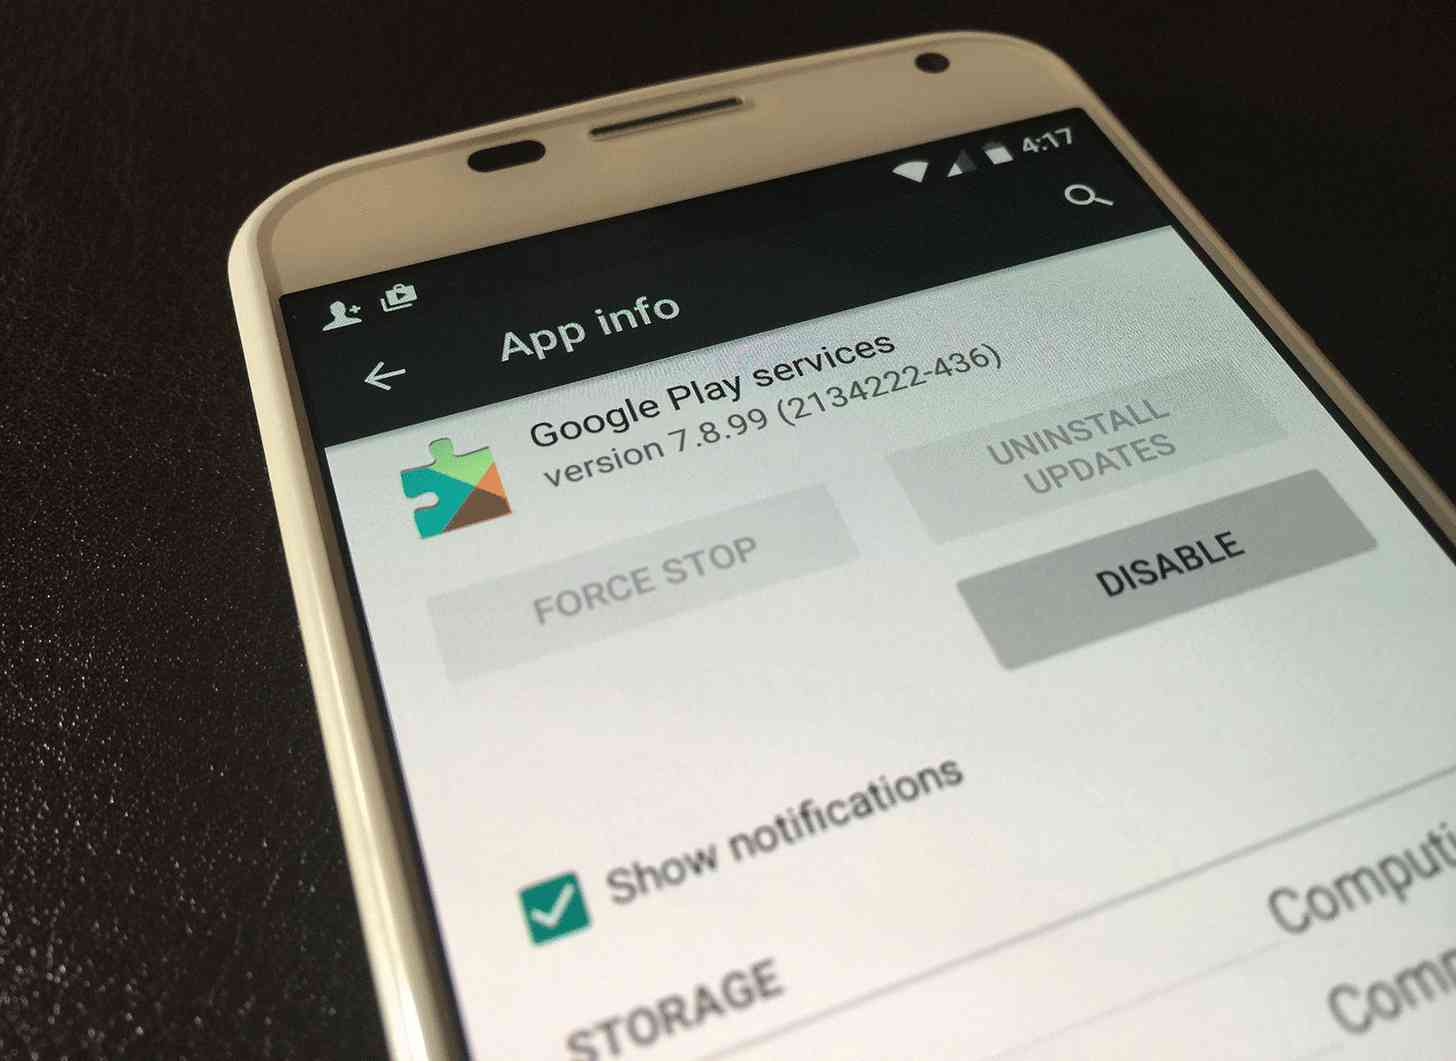 Google Play Services app info